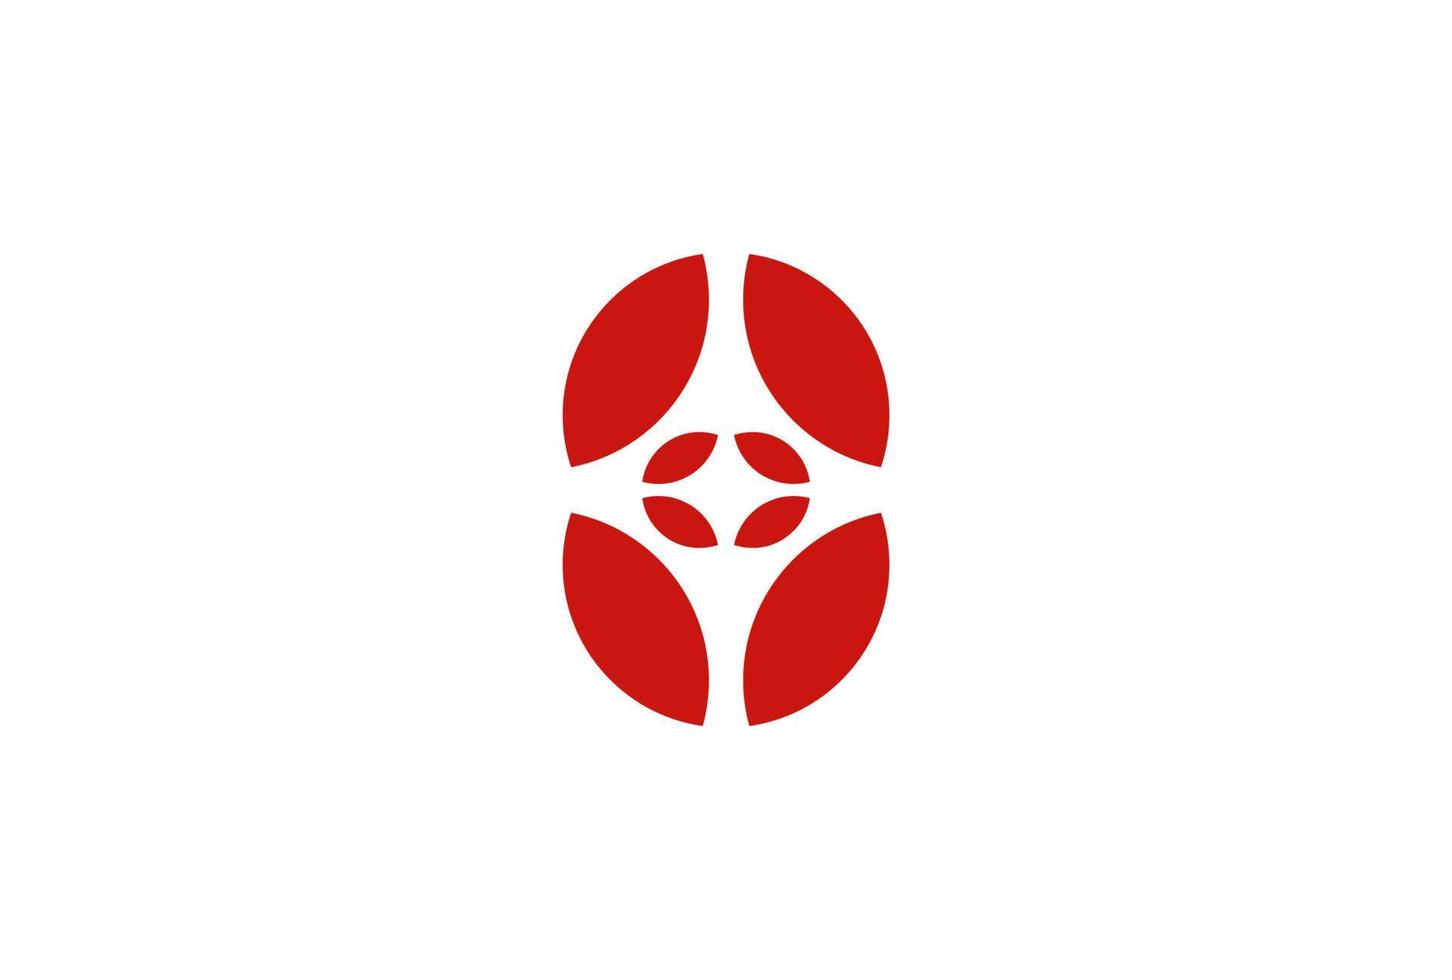 Abstract flower logo icon vector design. Simple elegant linear symbol